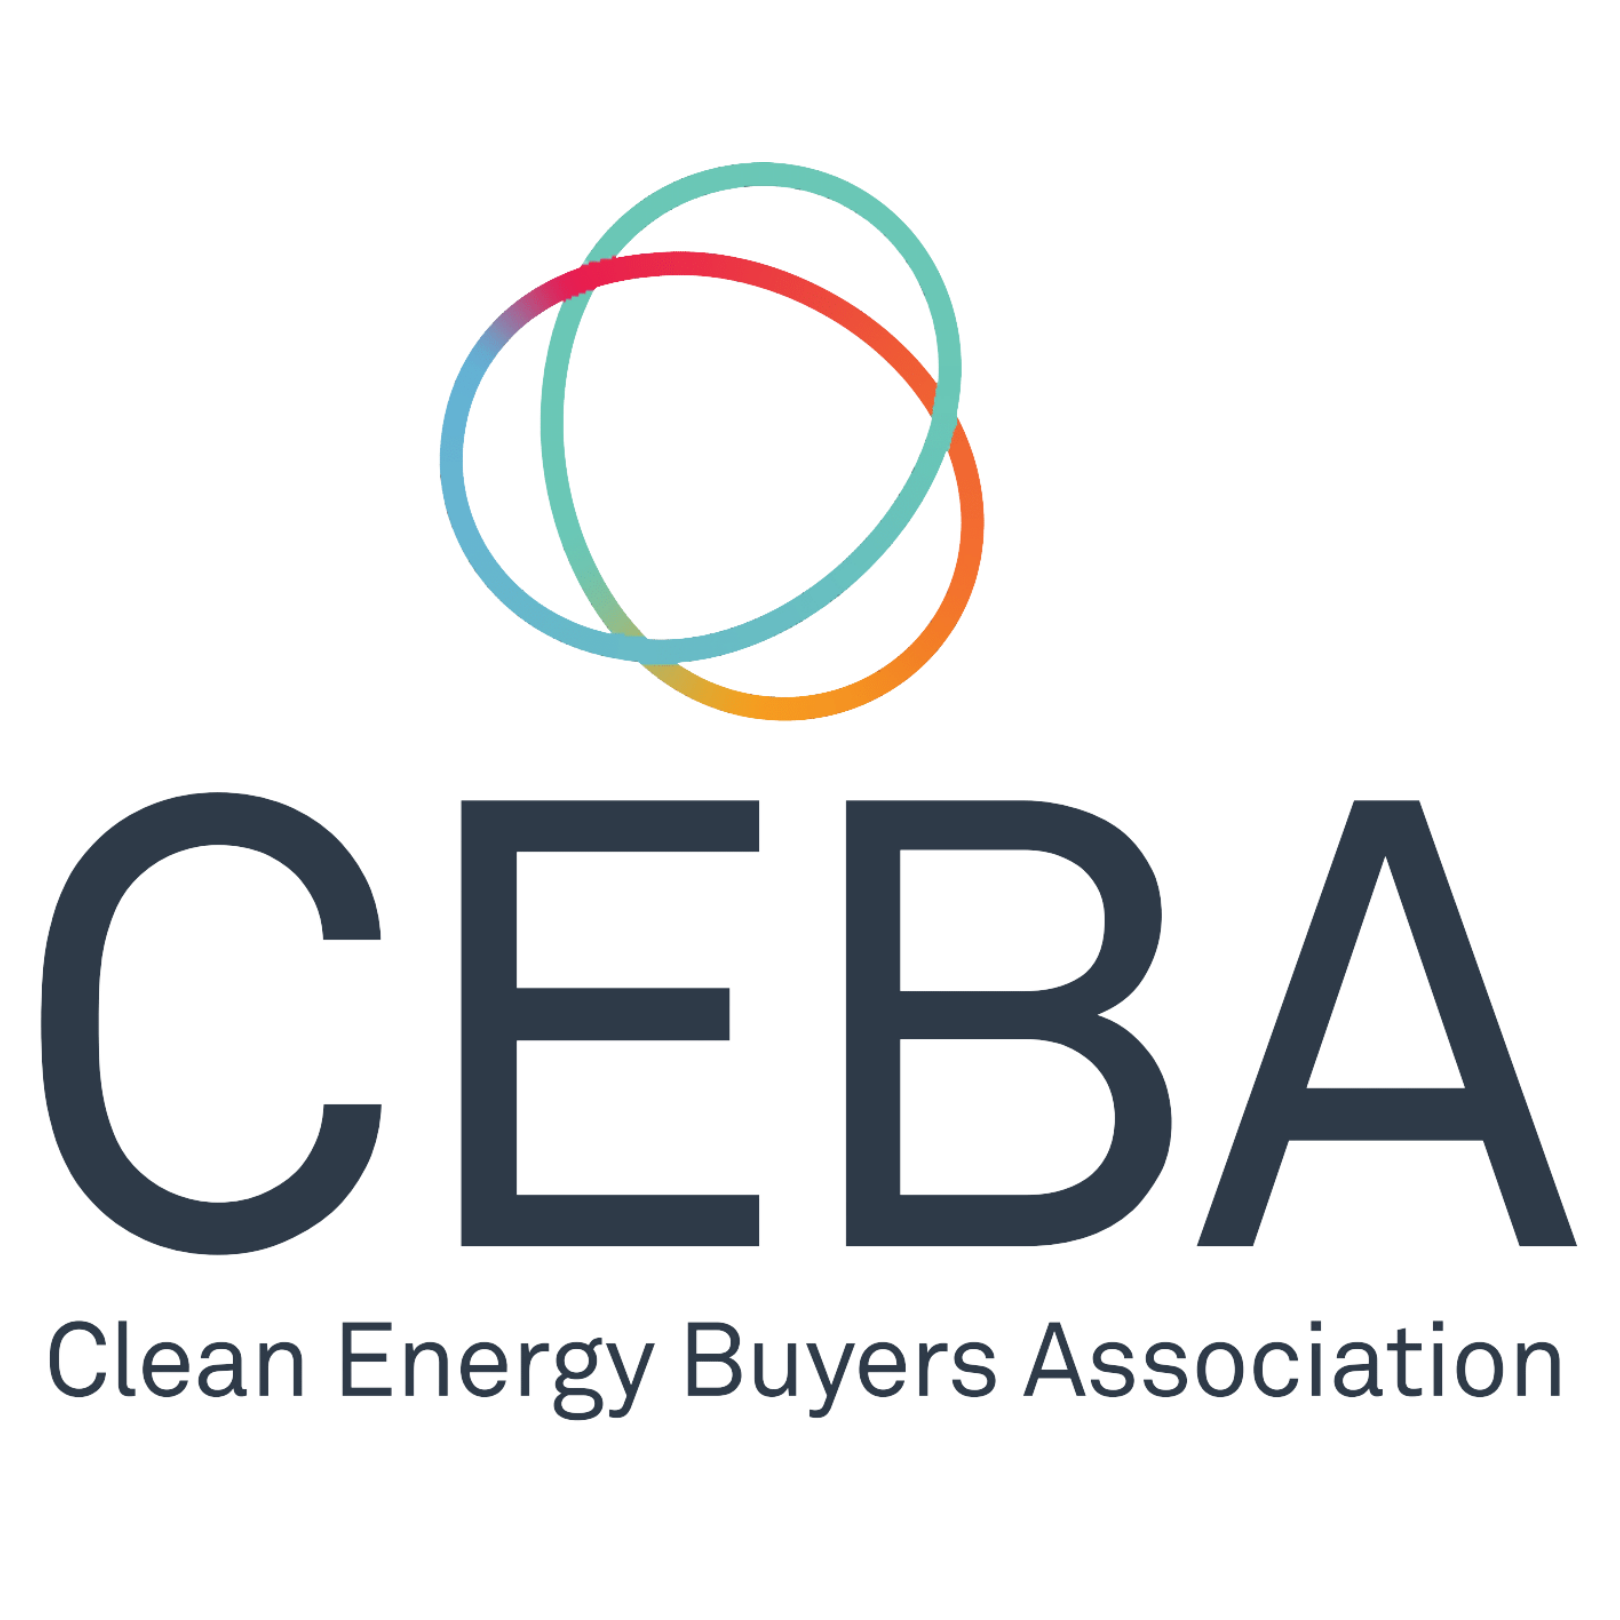 Clean Energy Buyers Association (CEBA)